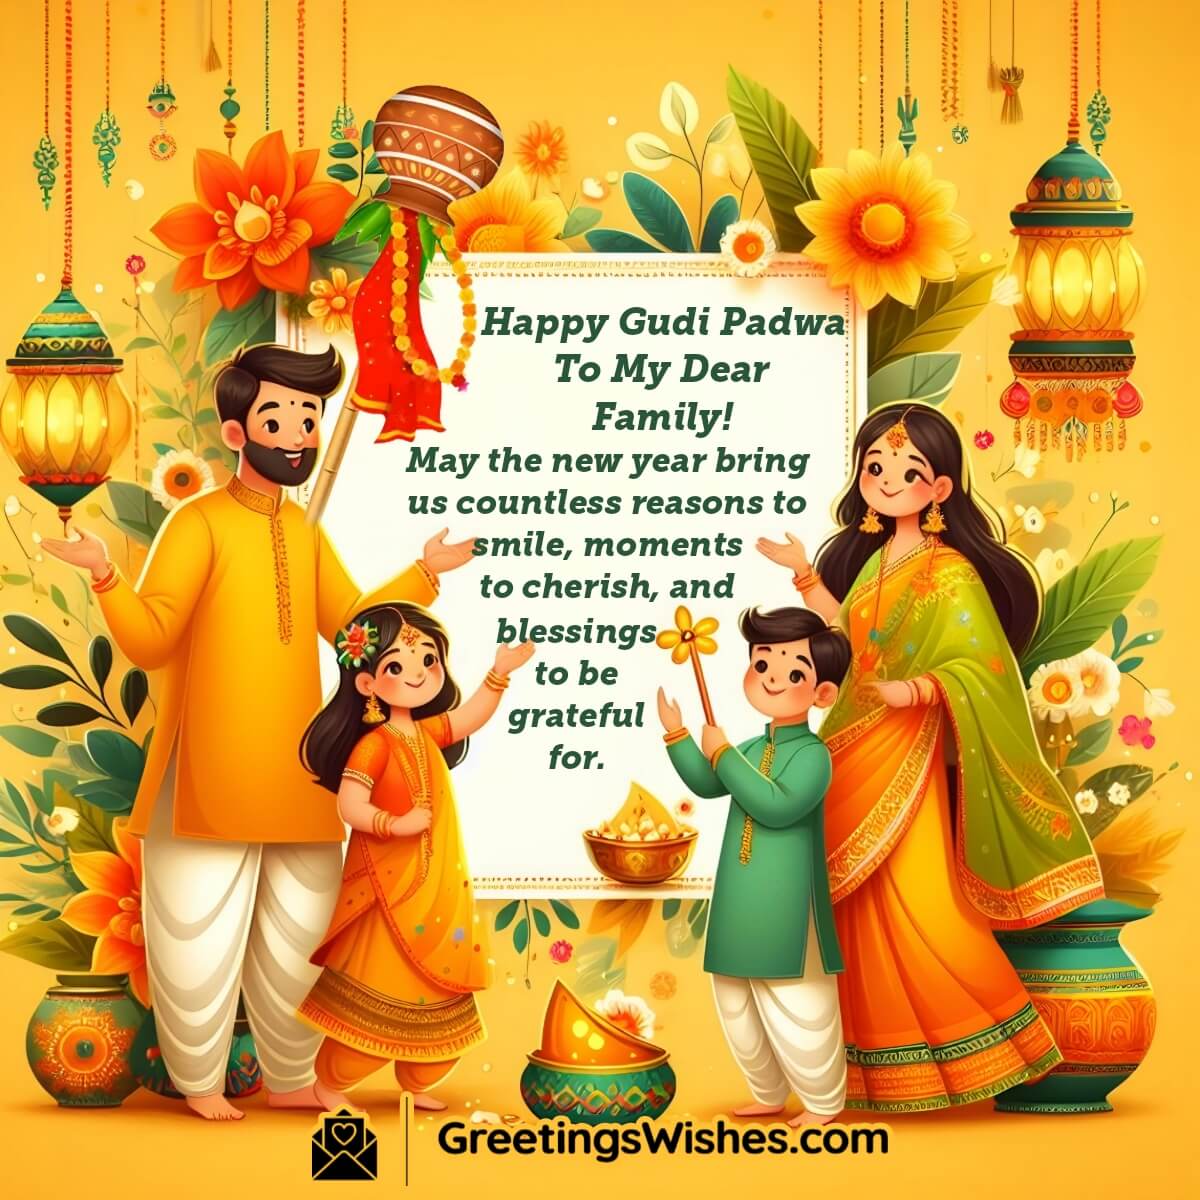 Happy Gudi Padwa Wishes For Family